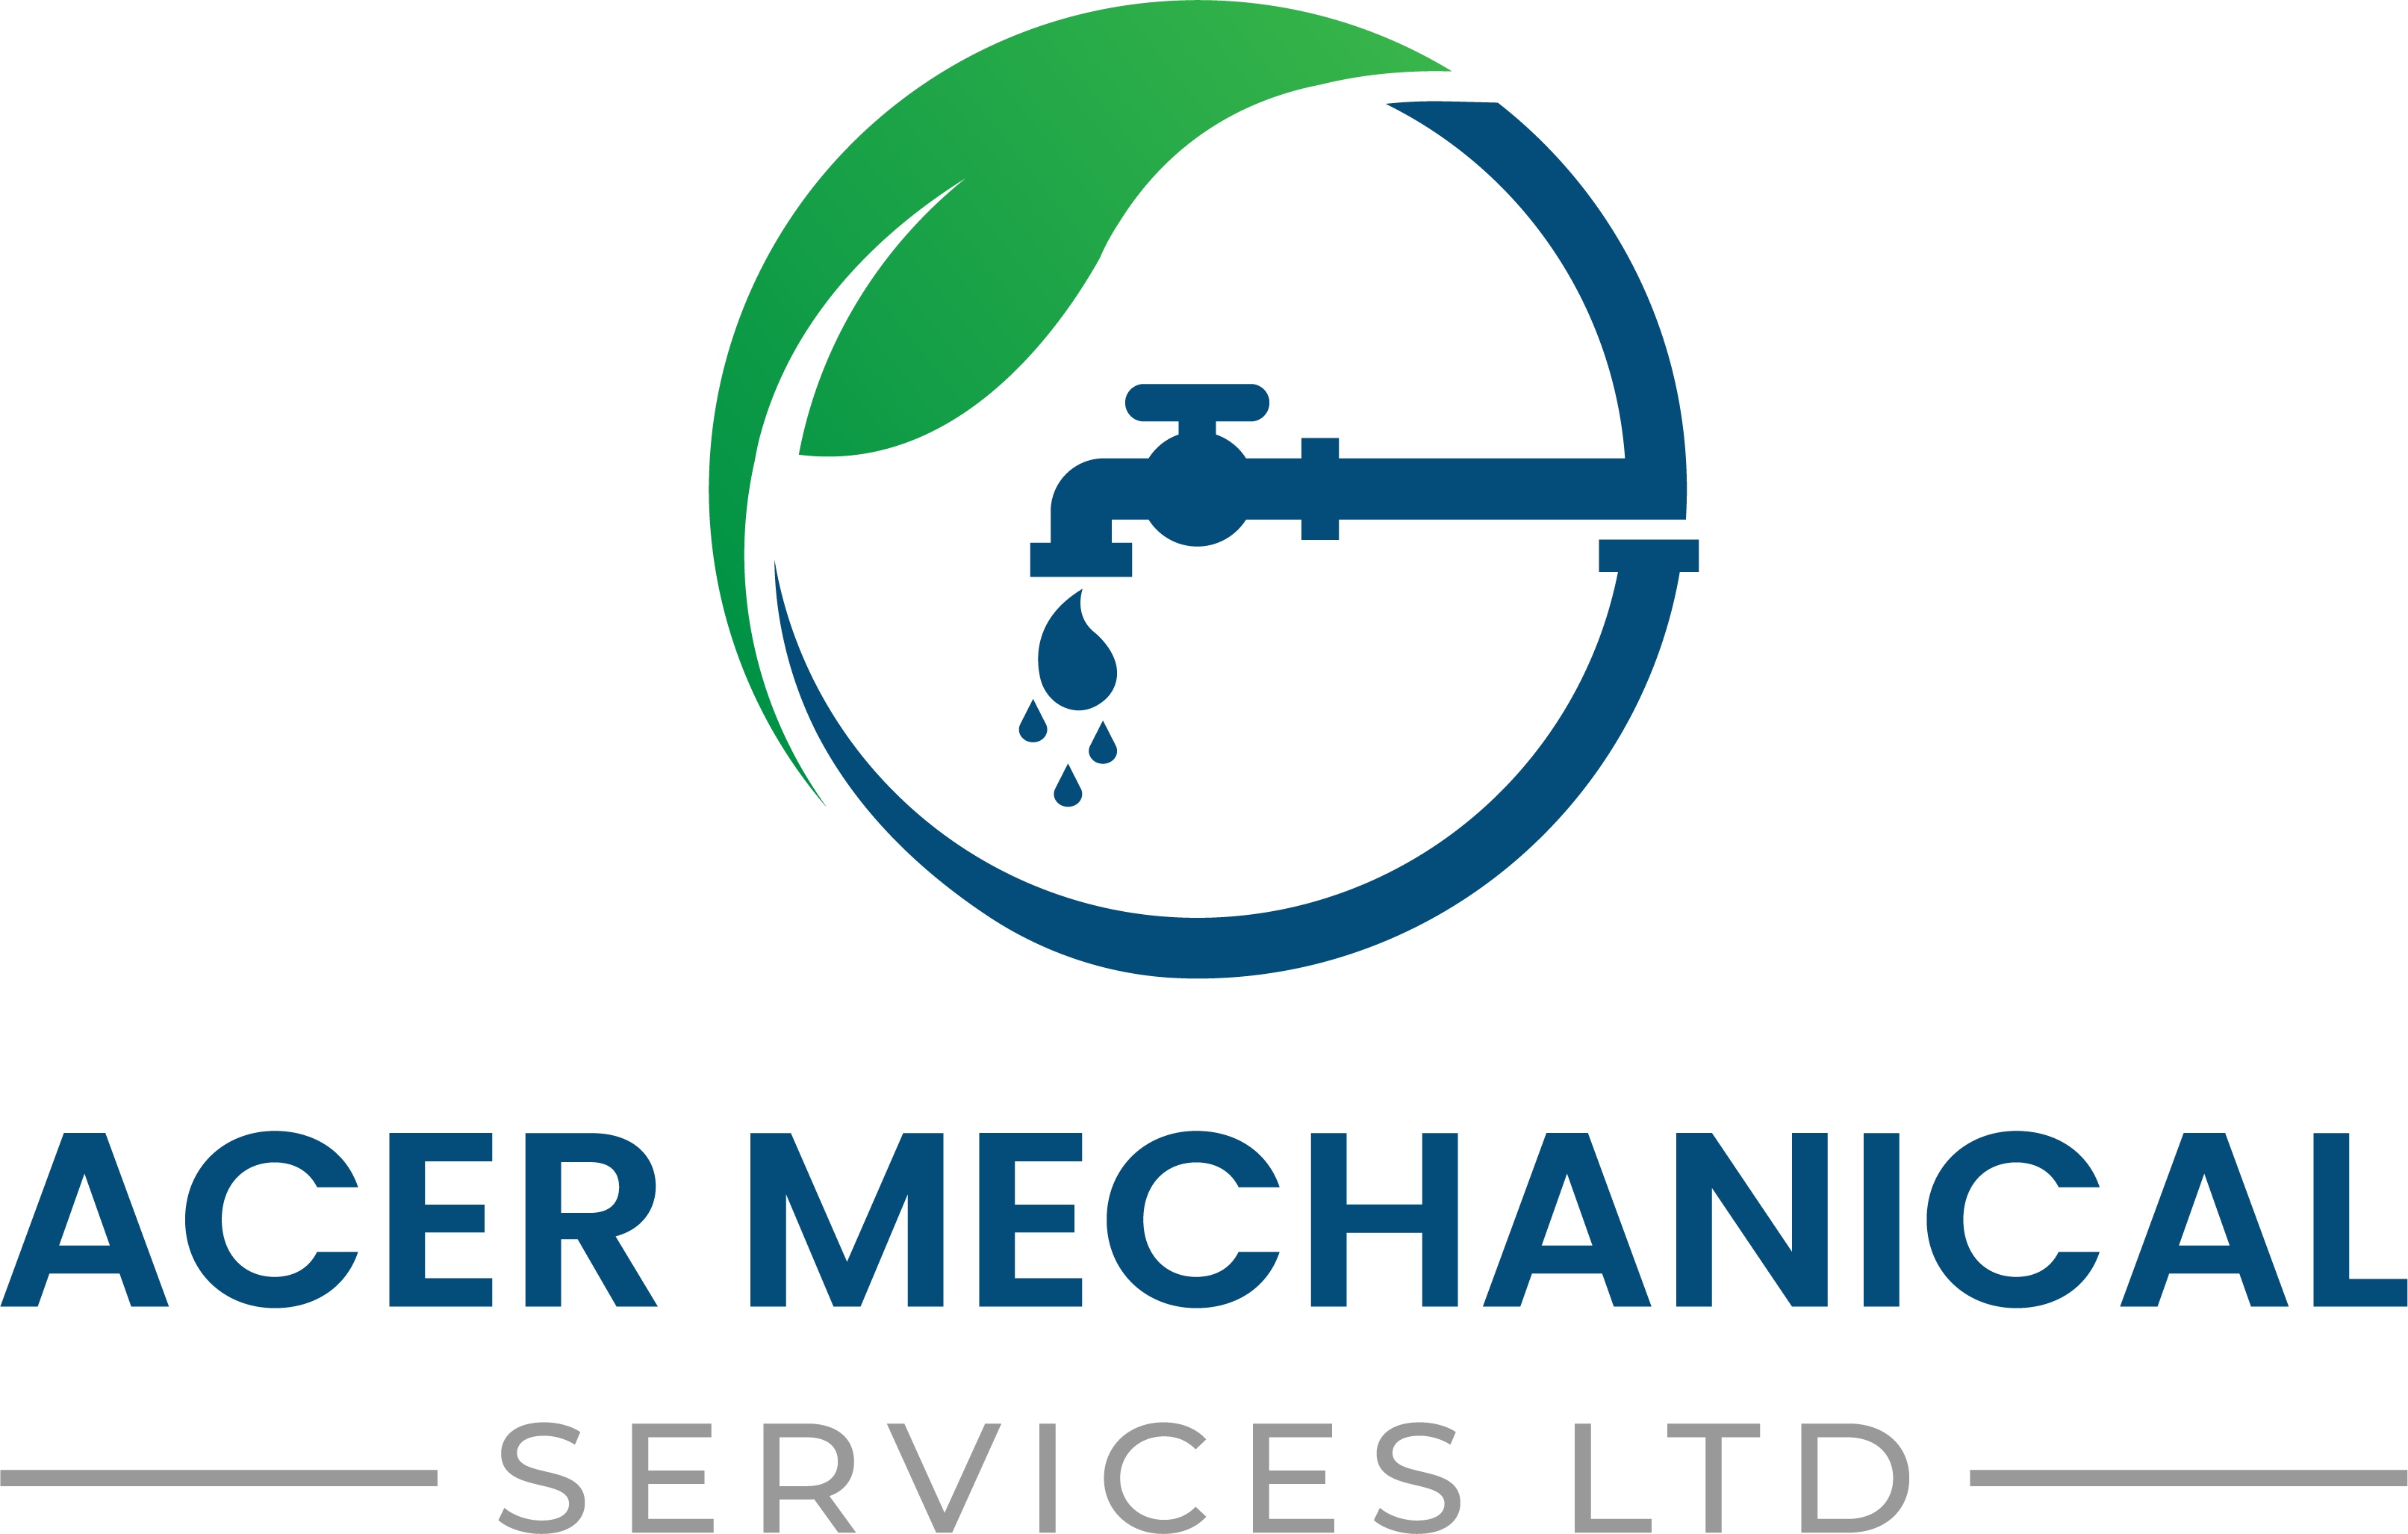 Acer Mechanical Services Ltd Logo